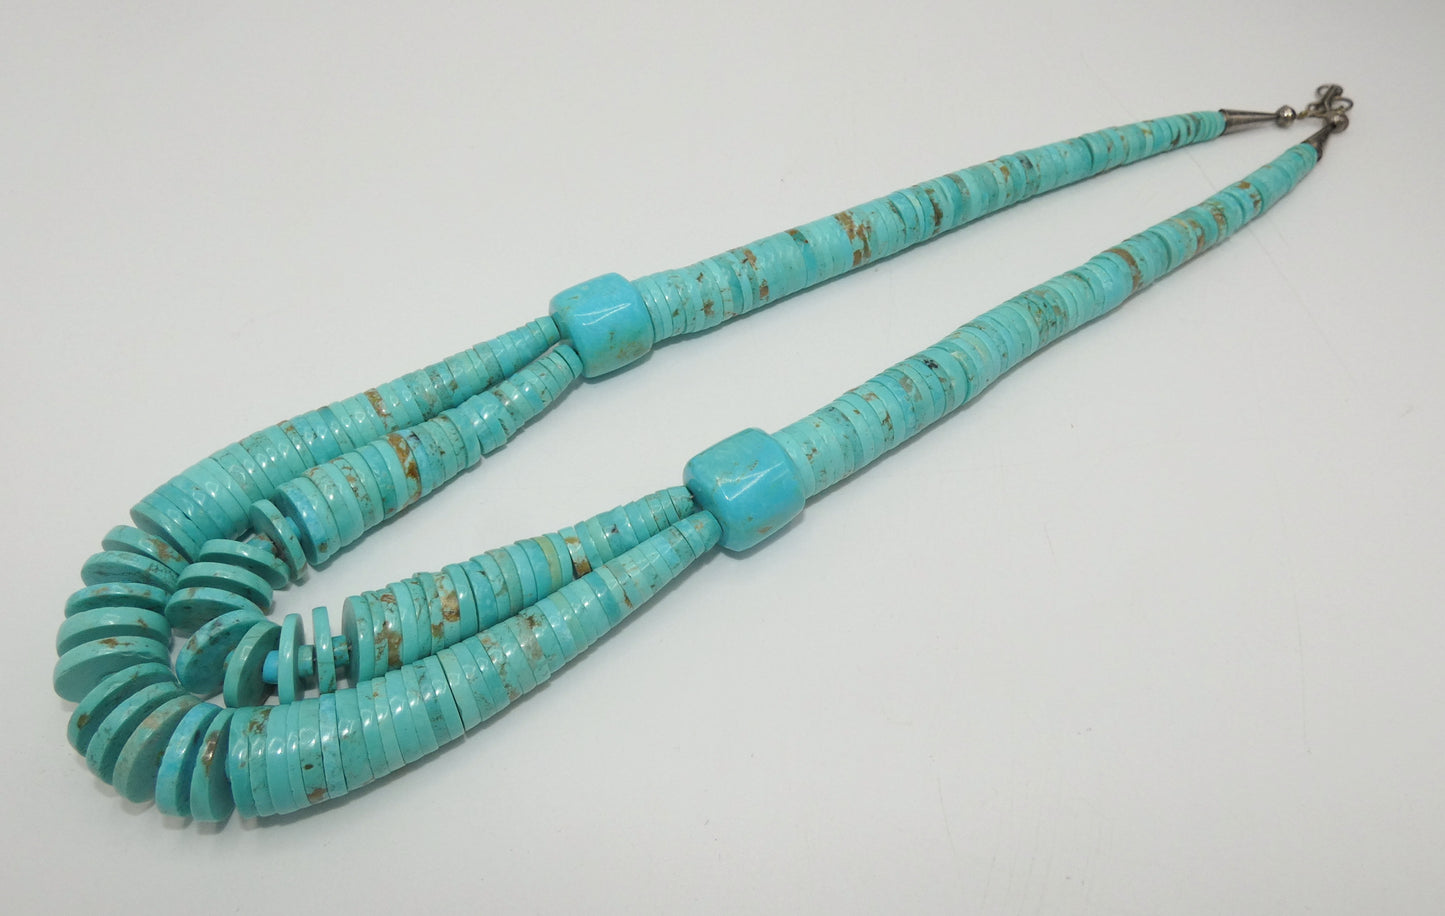 Santa Domingo Heishi Turquoise Double Row Necklace